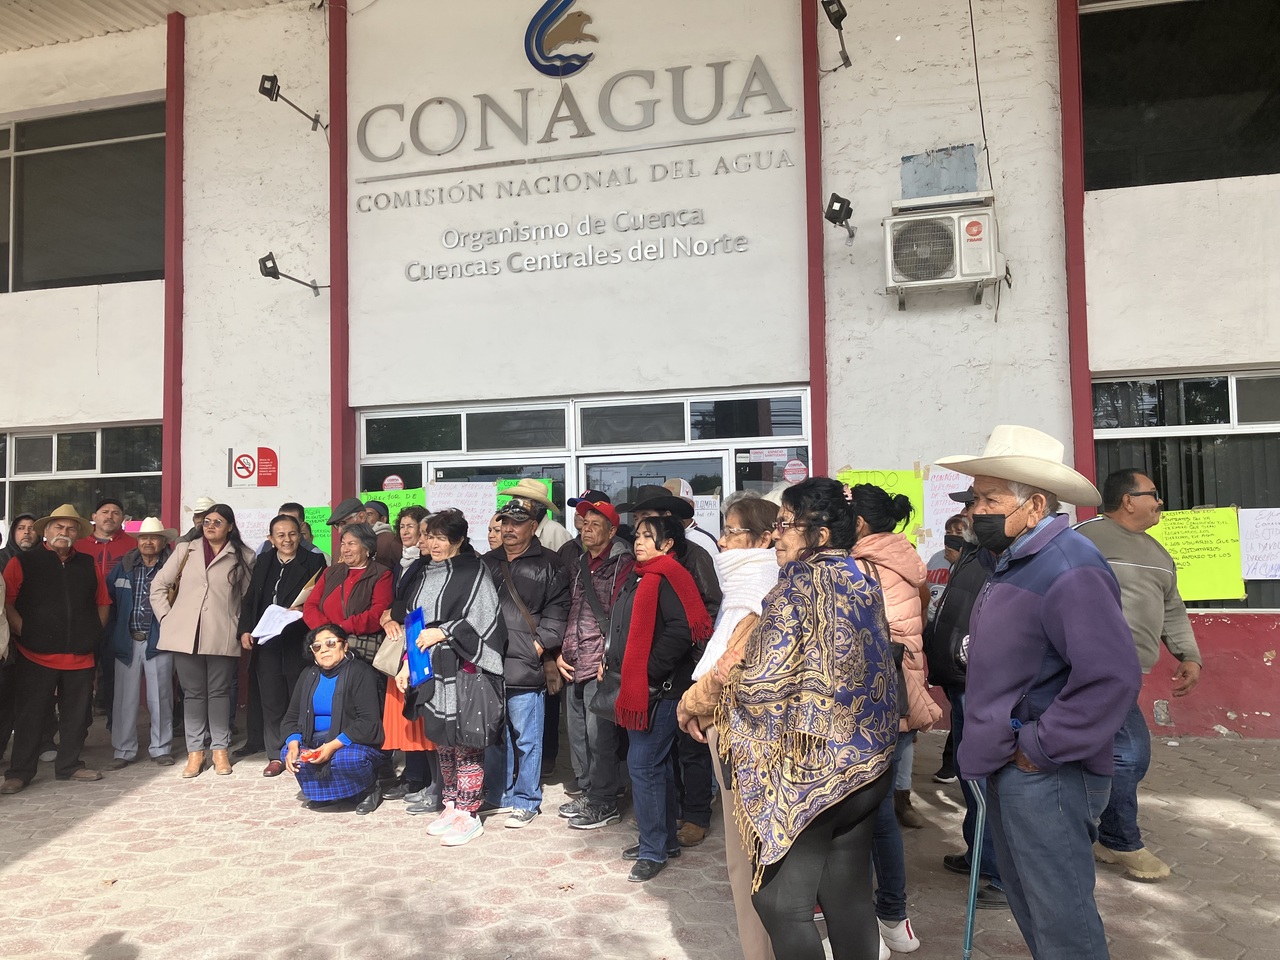 Protestan en Conagua por despojo de agua, documentarán casos irregulares en Contraloría Ciudadana. (FOTOS: VAYRON INFANTE)